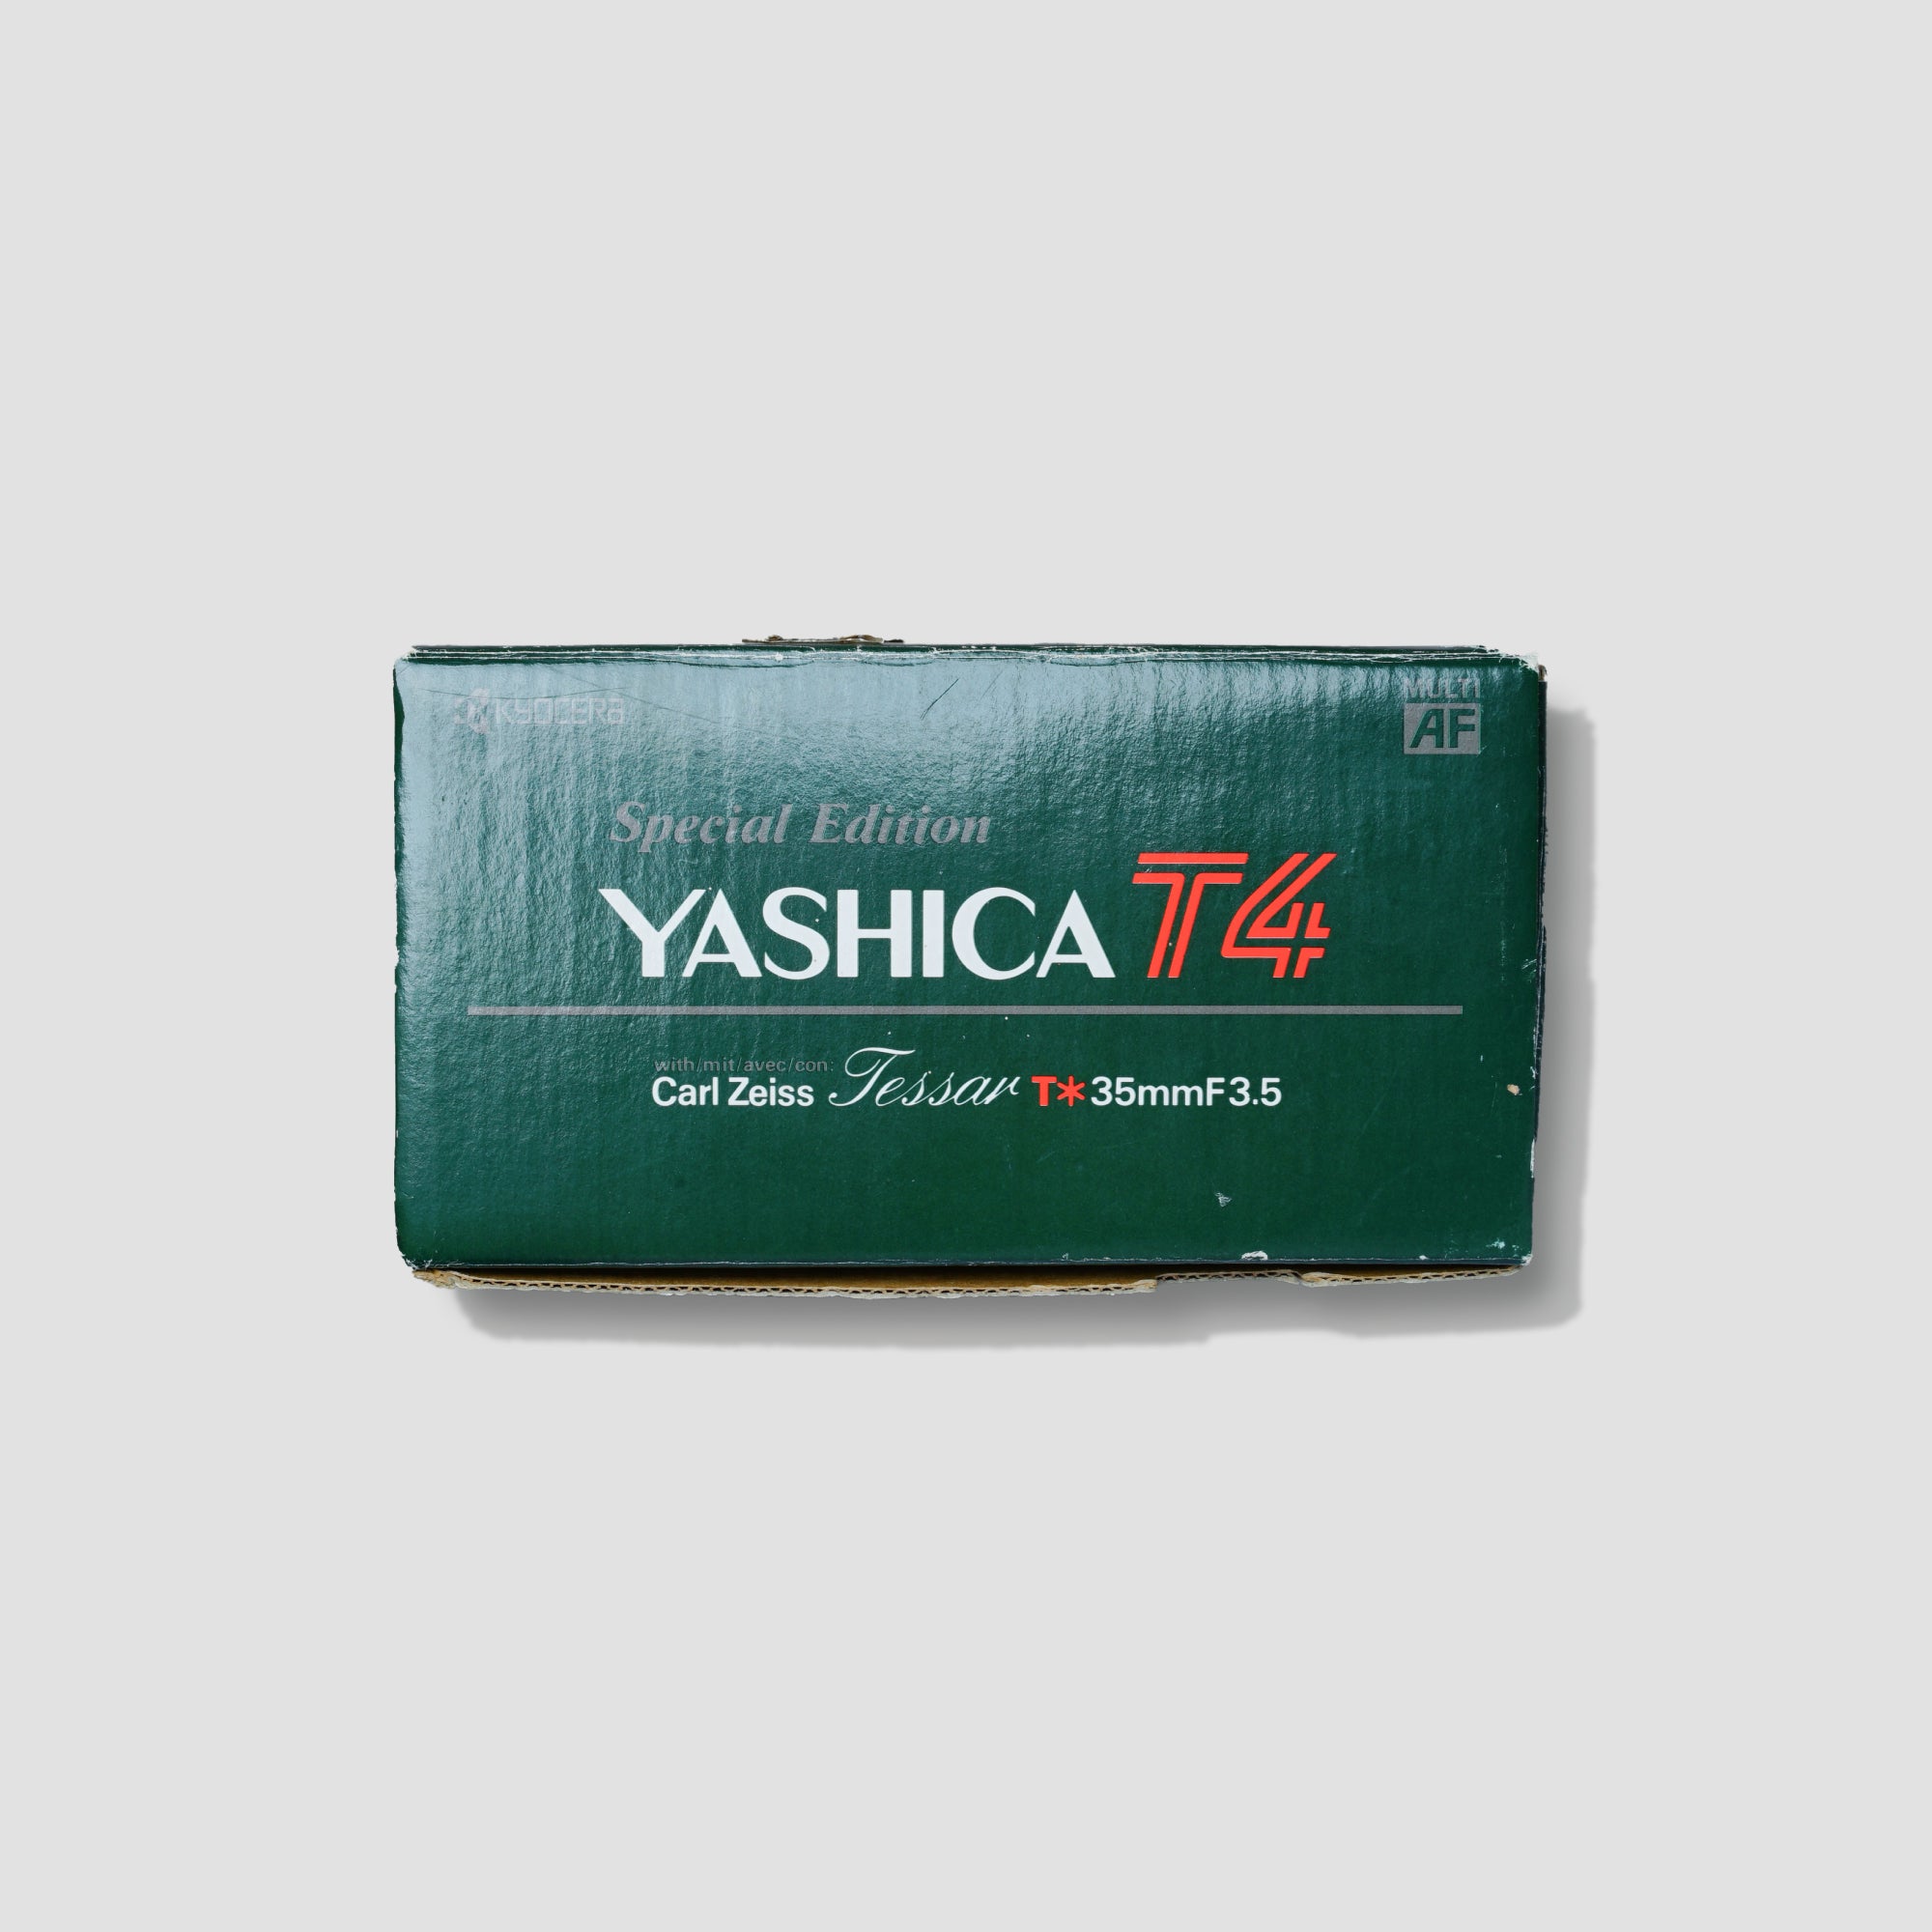 Yashica T4 Safari (Limited edition)